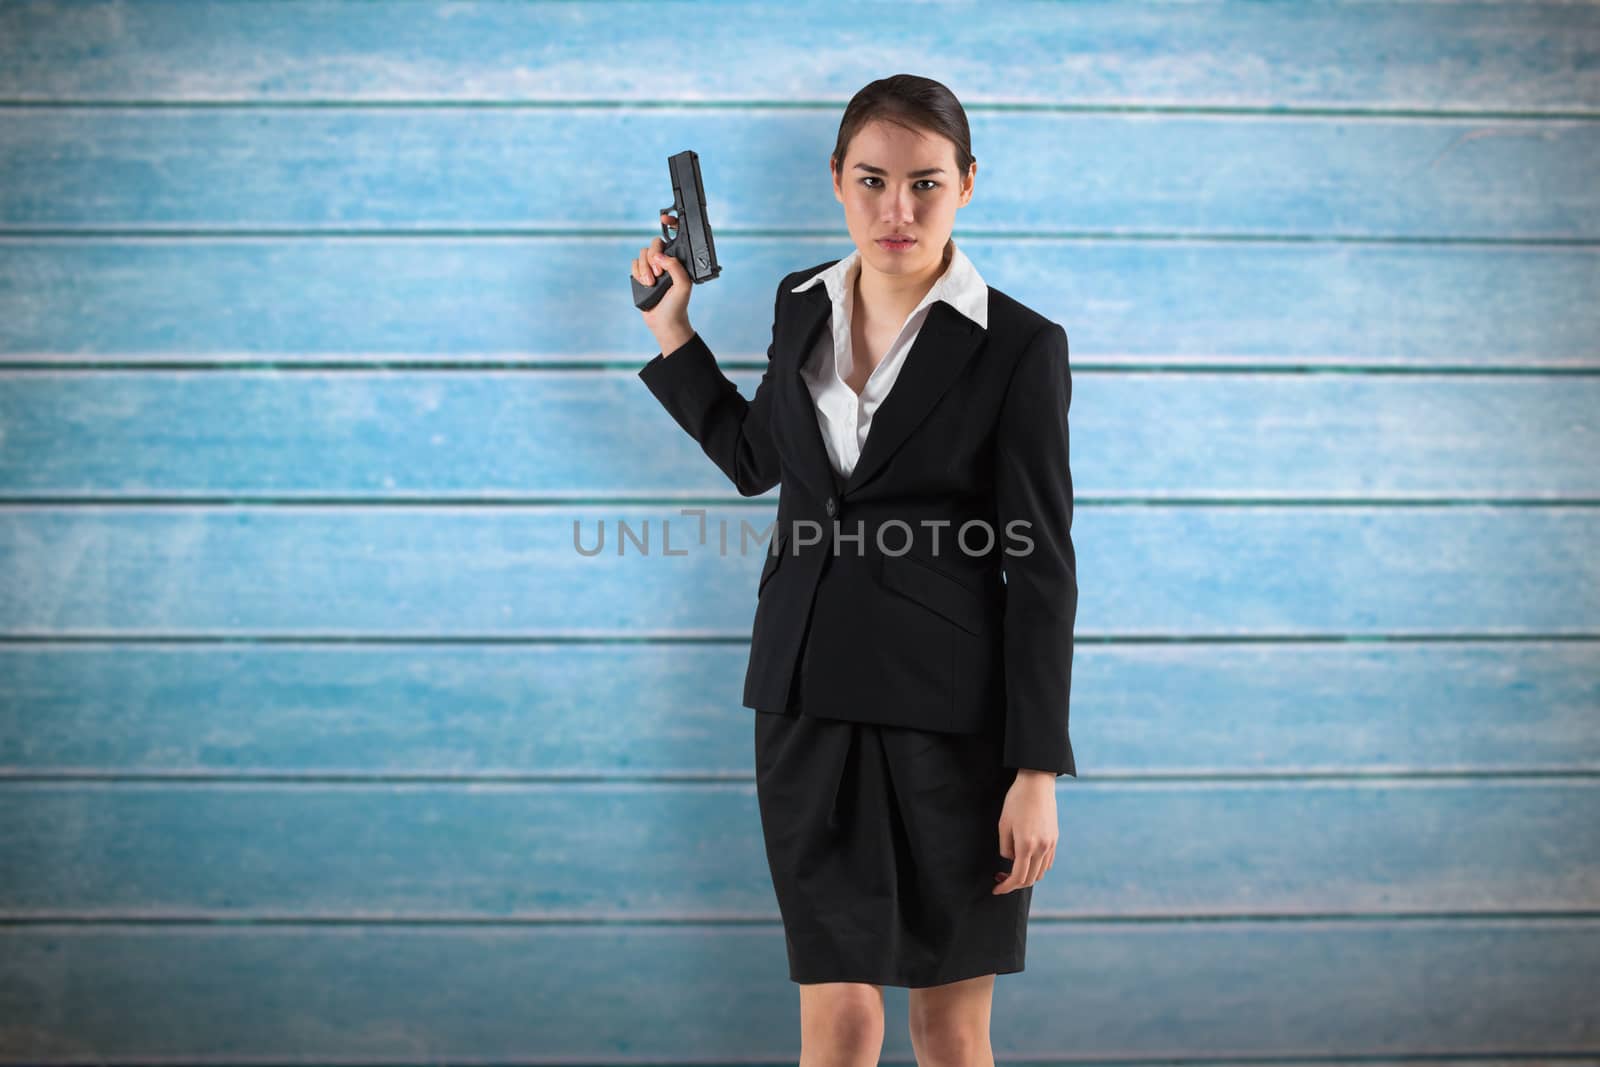 Businesswoman holding a gun against wooden planks